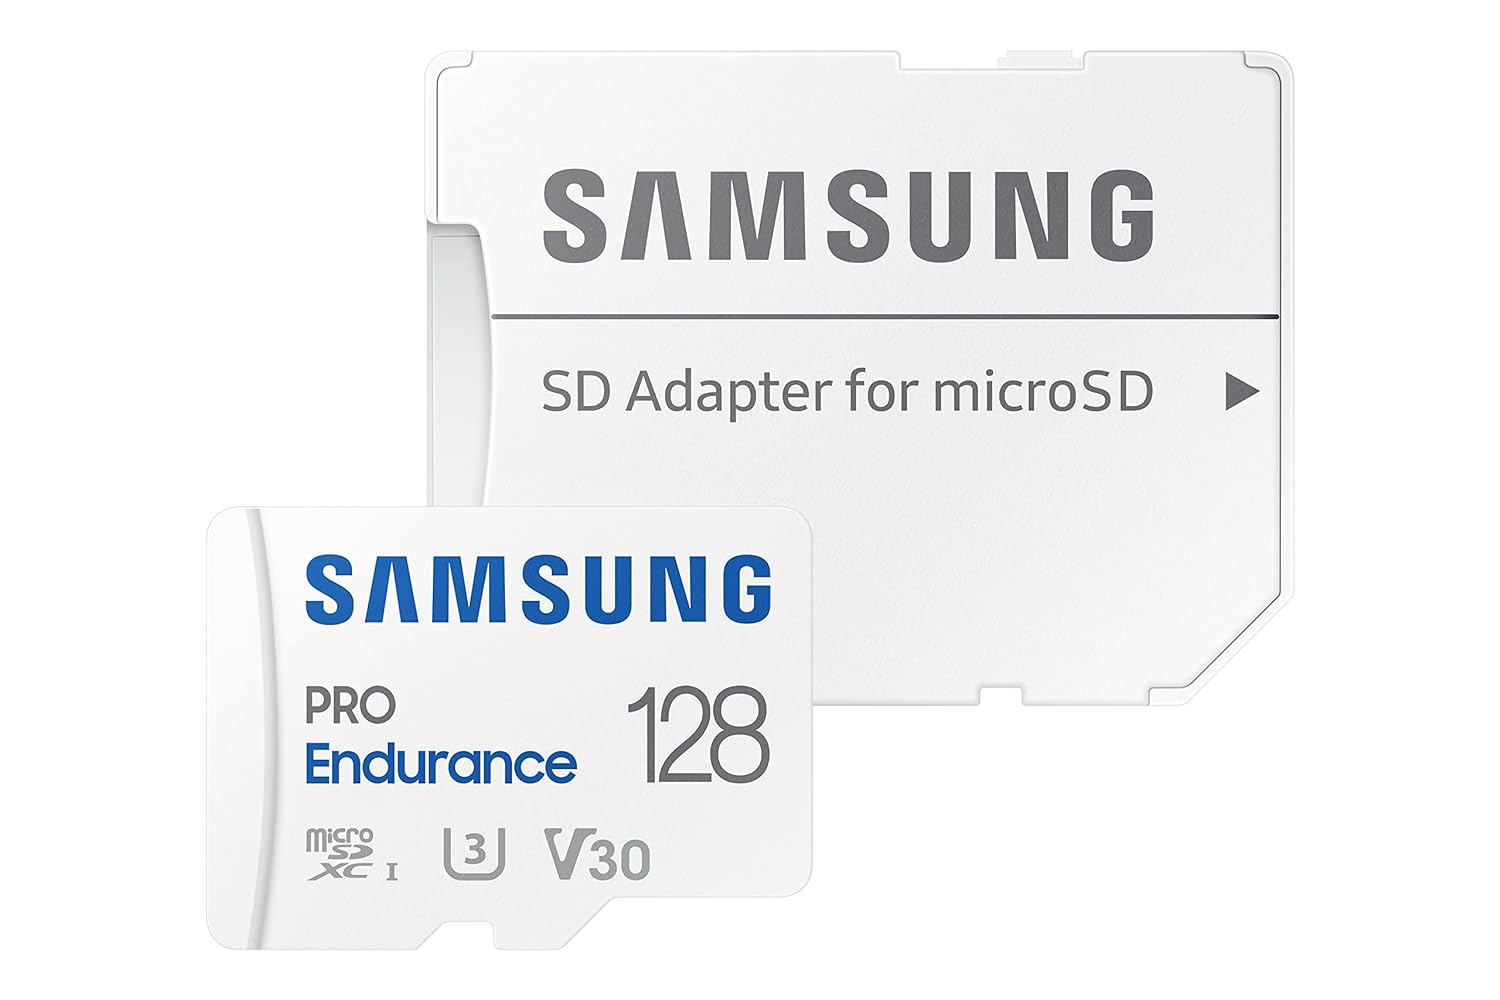 SAMSUNG PRO Endurance 128GB MicroSDXC Memory Card with Adapter for Dash Cam, Body Cam, and security camera – Class 10, U3, V30 (MB-MJ128KA/AM)